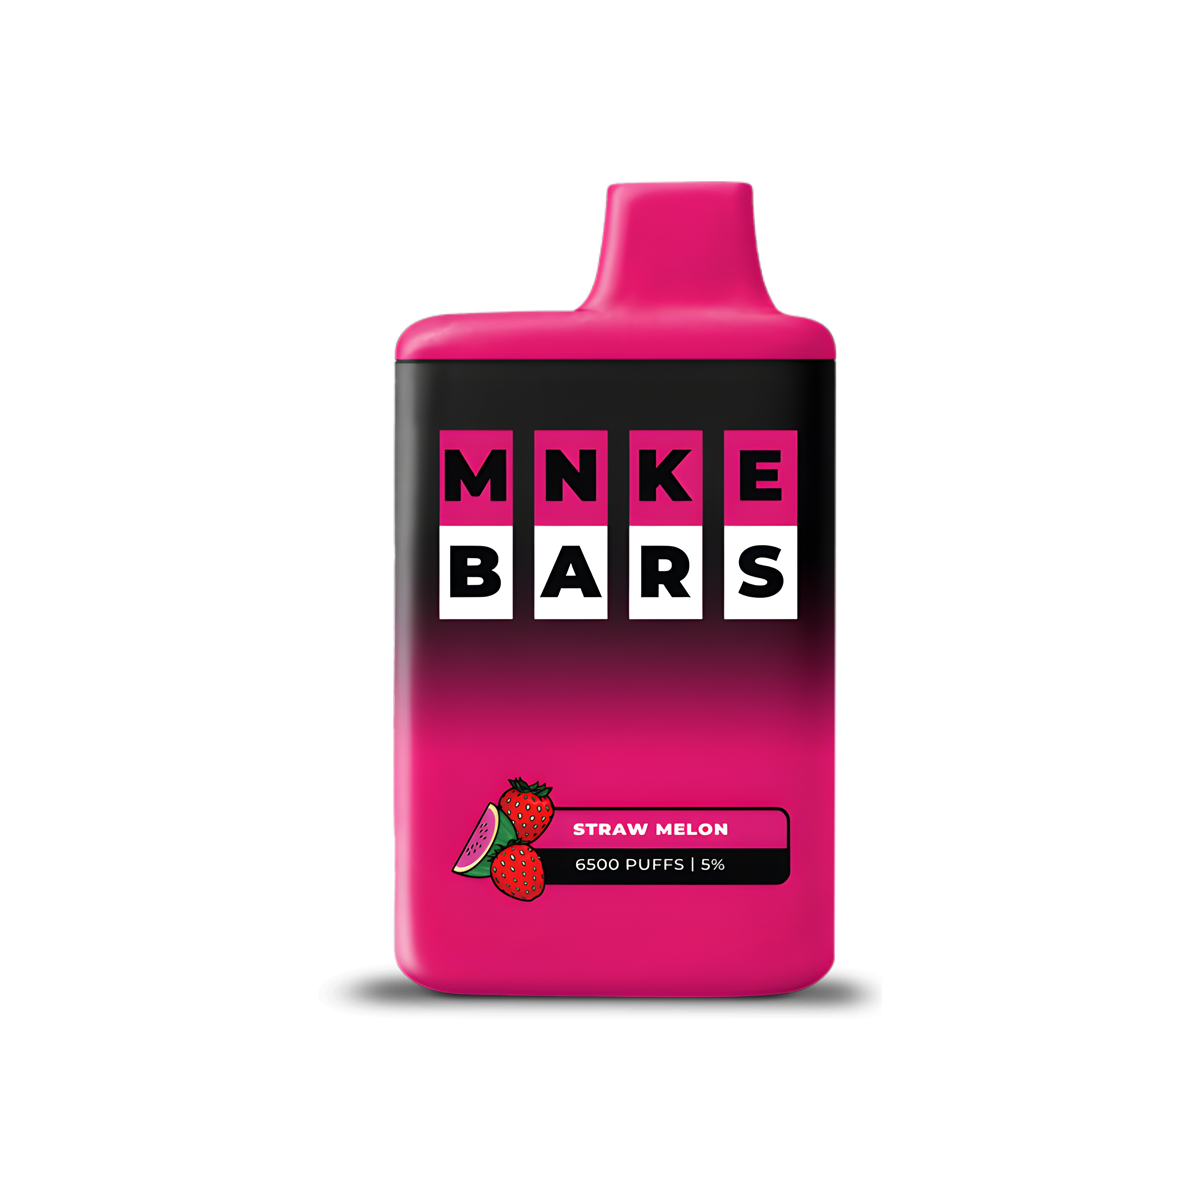 MNKE Bars 6500 Disposable Vape Straw Melon  